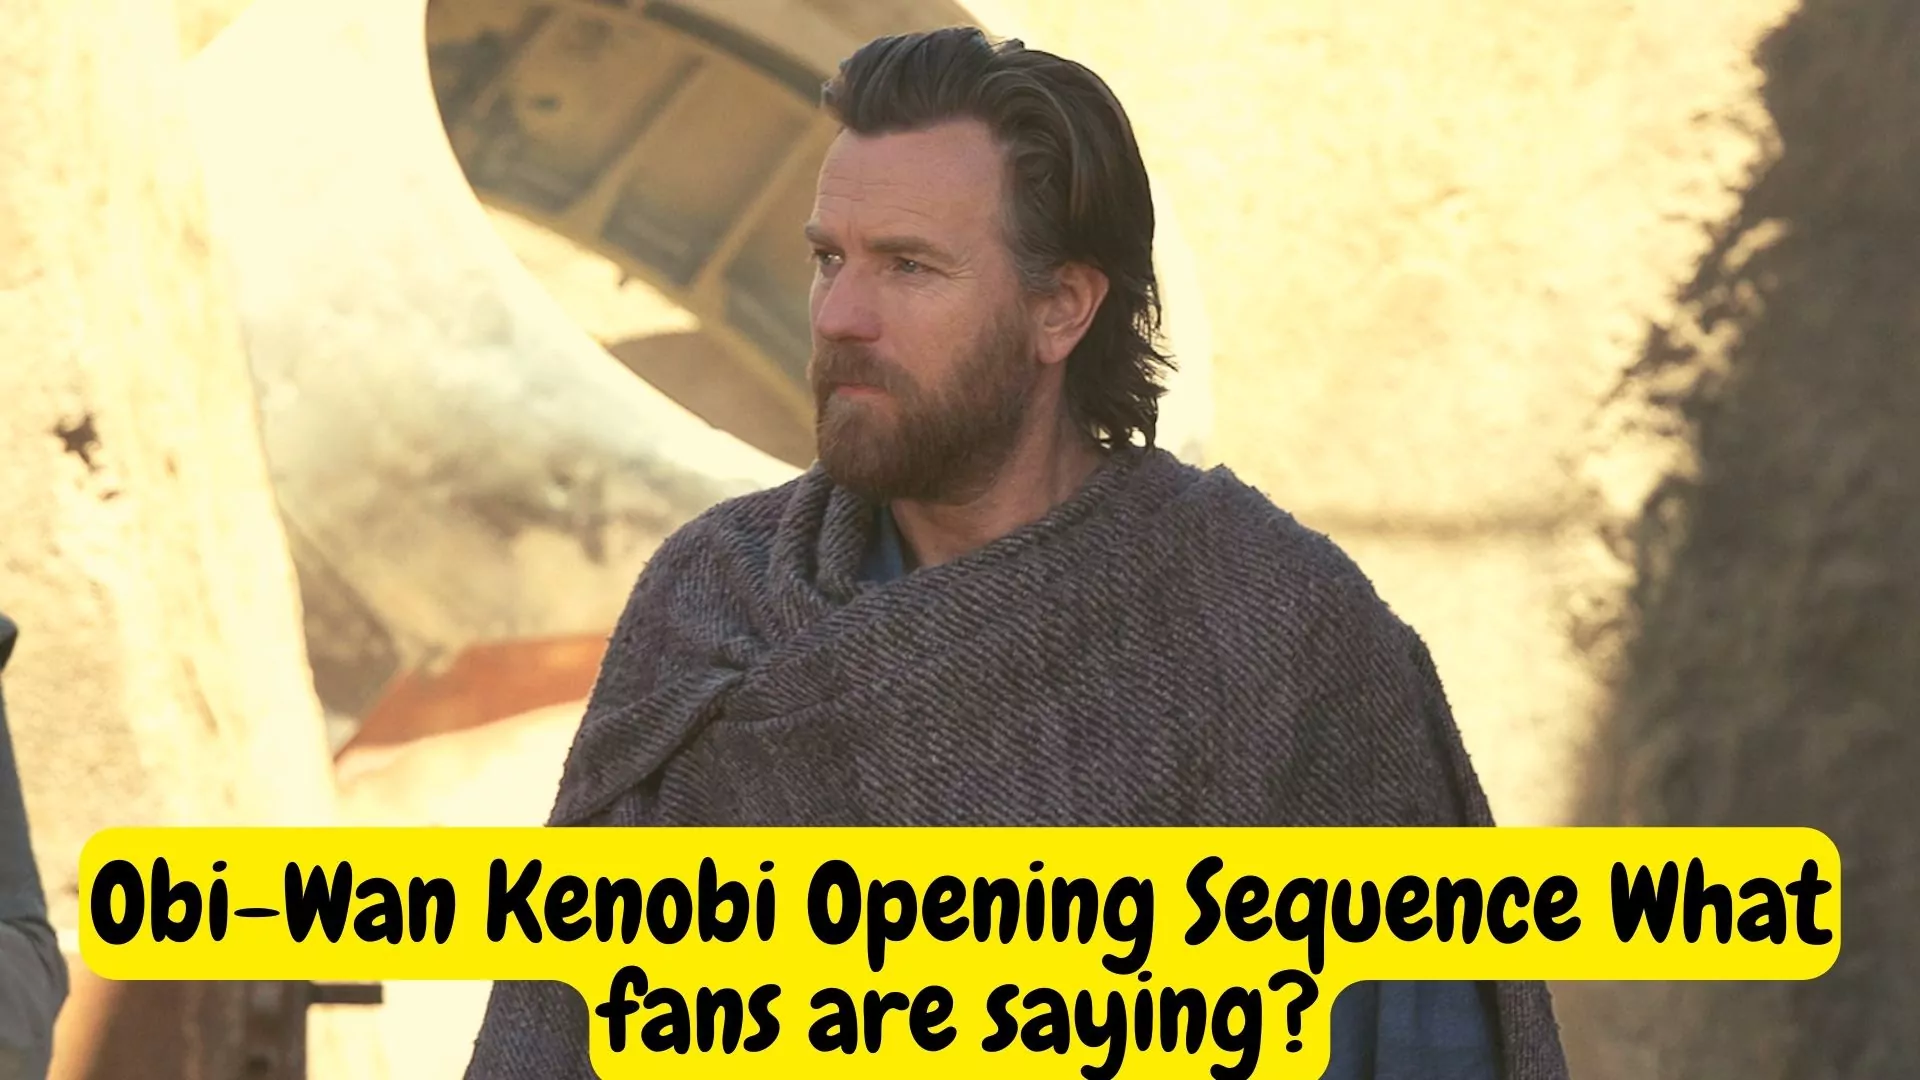 Obi-Wan Kenobi Opening Sequence What fans are saying?